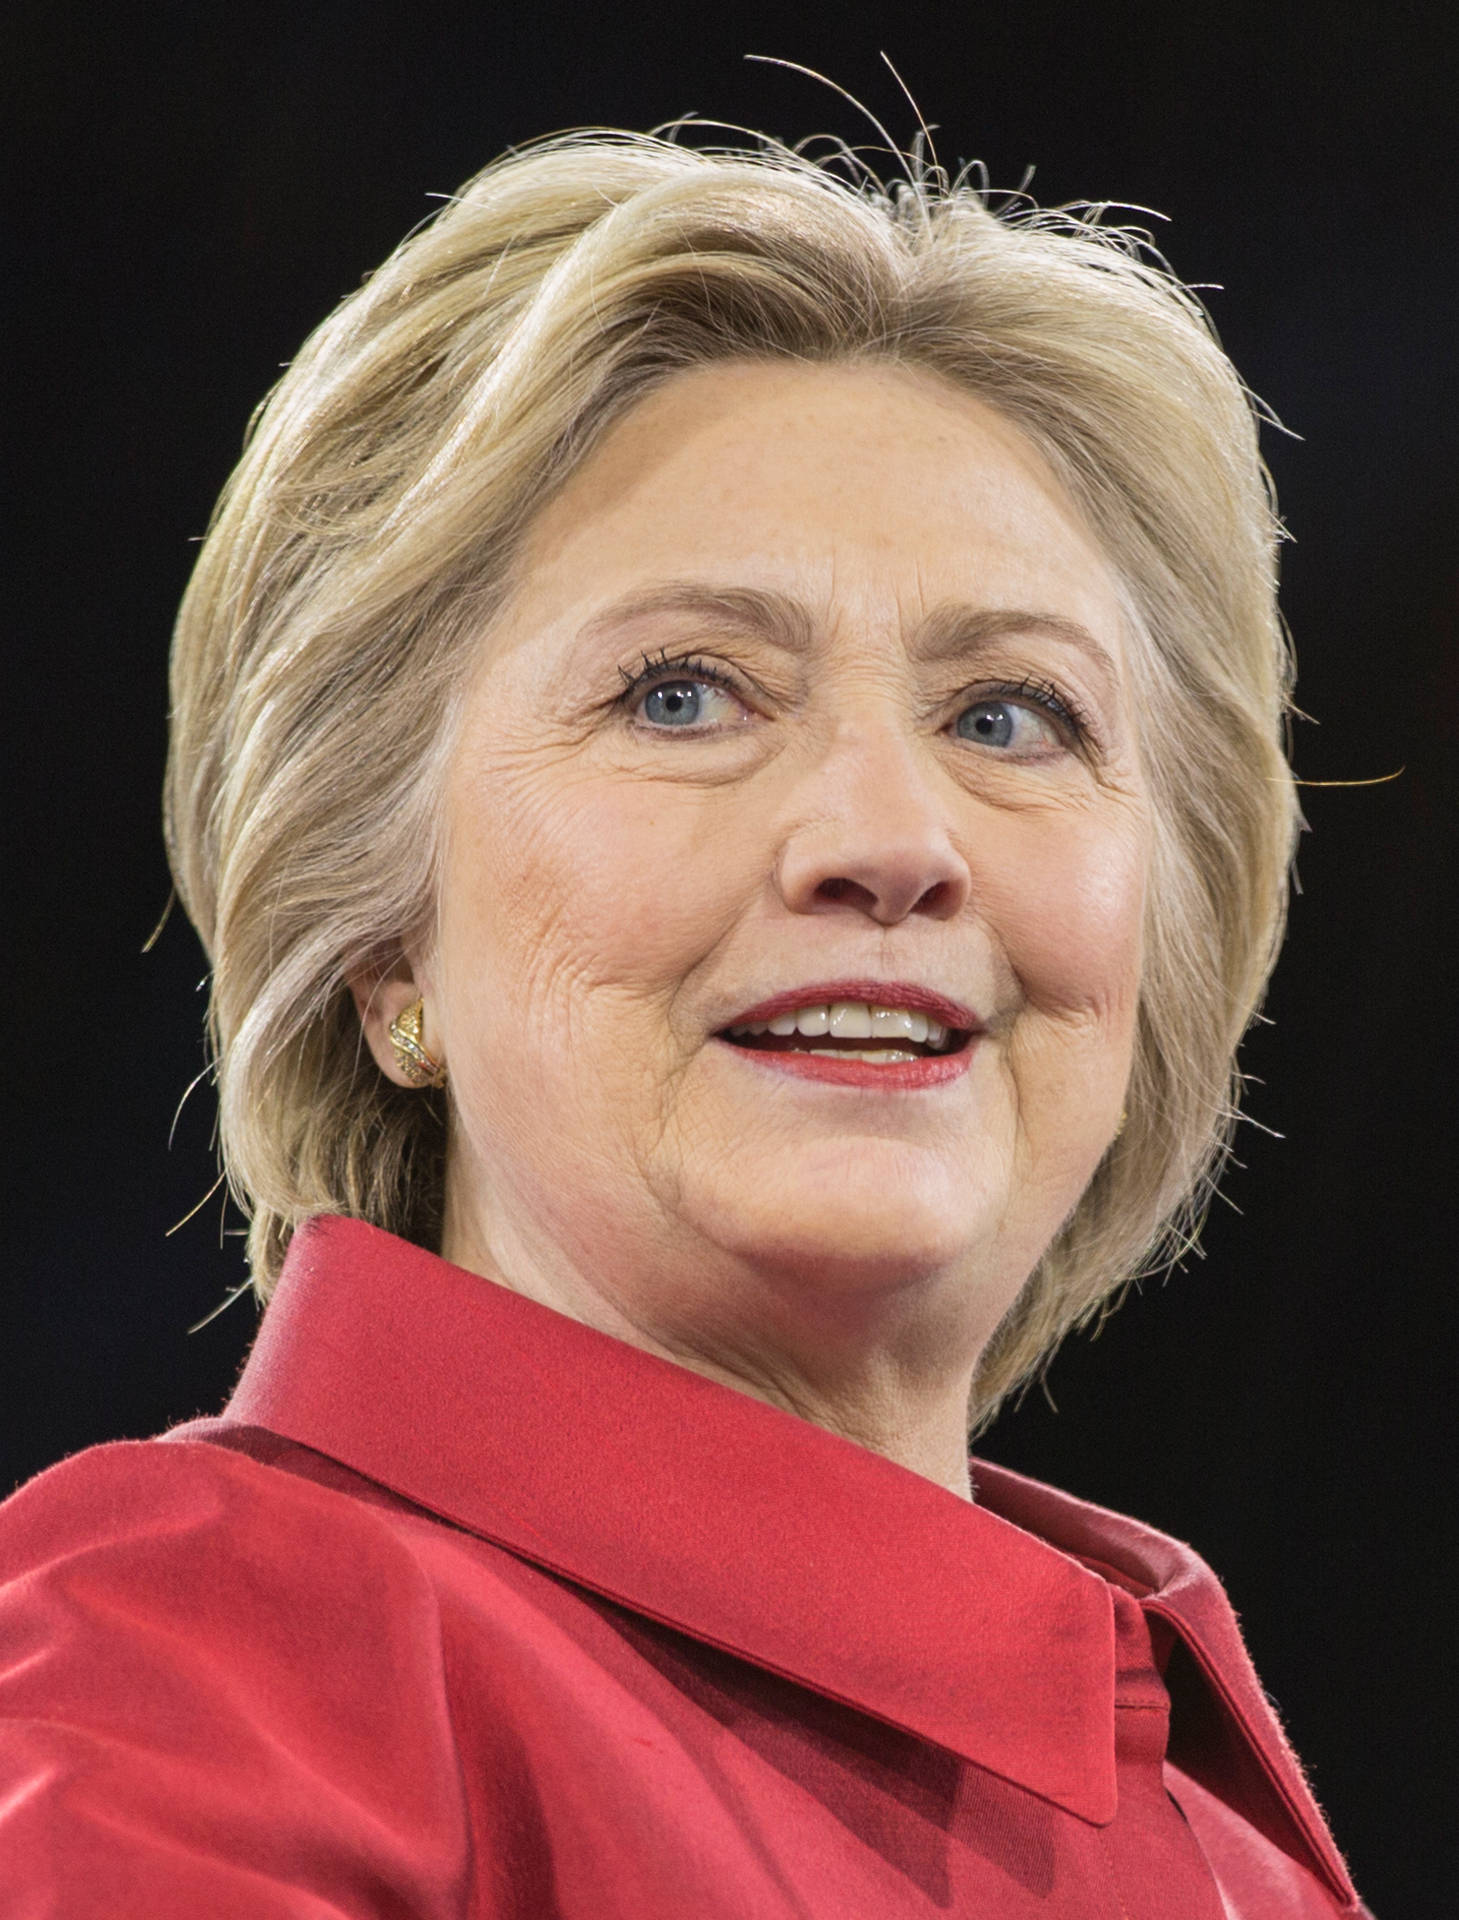 Hillary Clinton Adoring Look Background